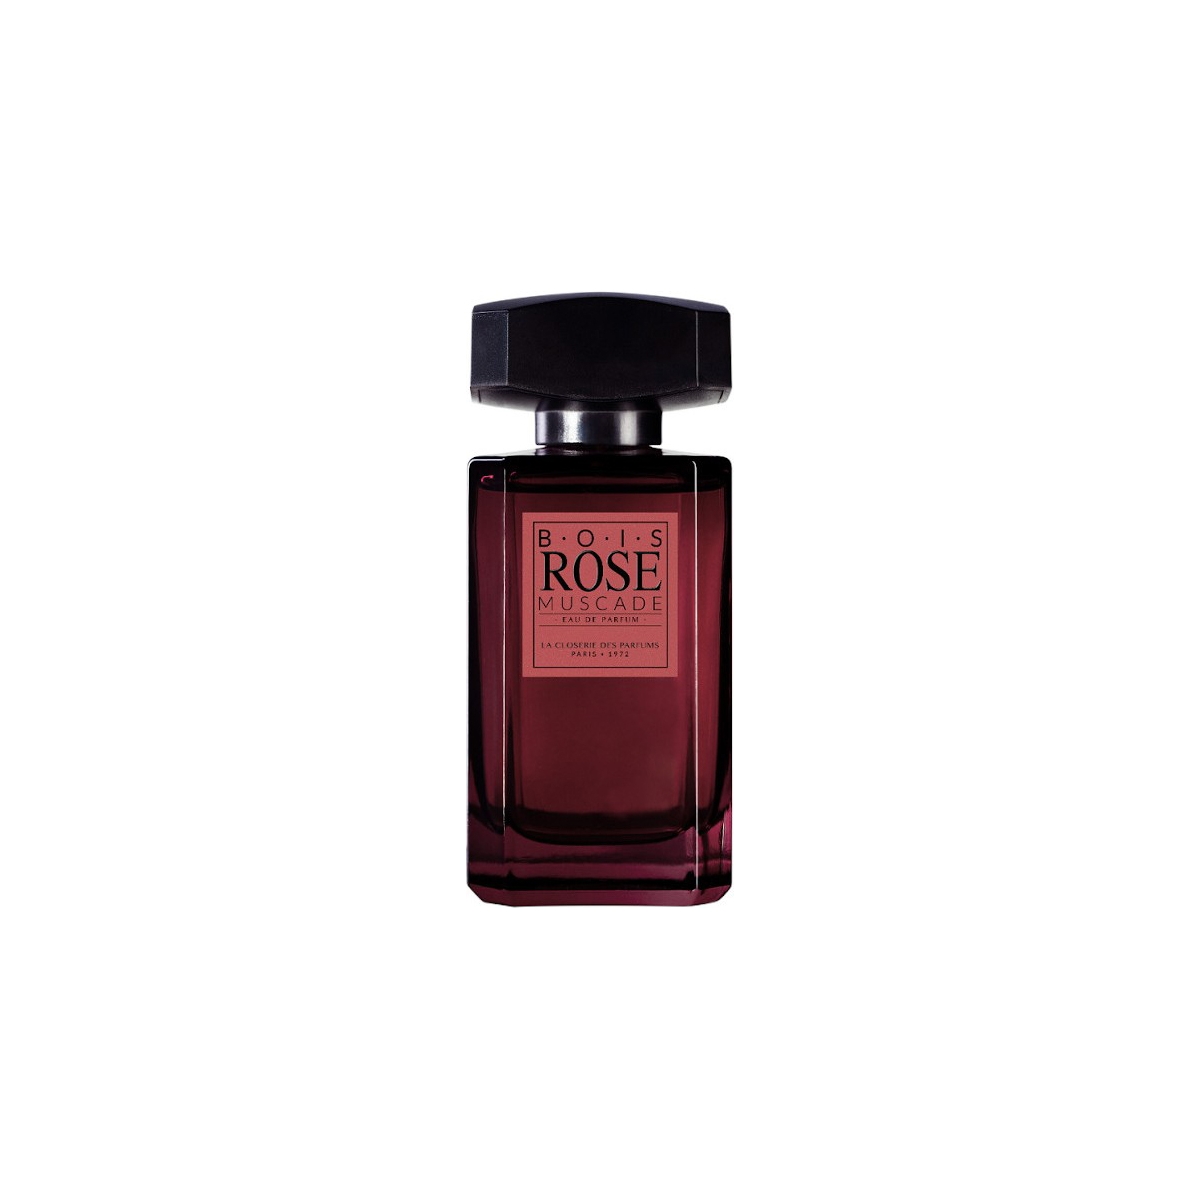 Bois Rose La Closerie des Perfumes Perfumes, Unisex Perfumes, Arada Perfumes